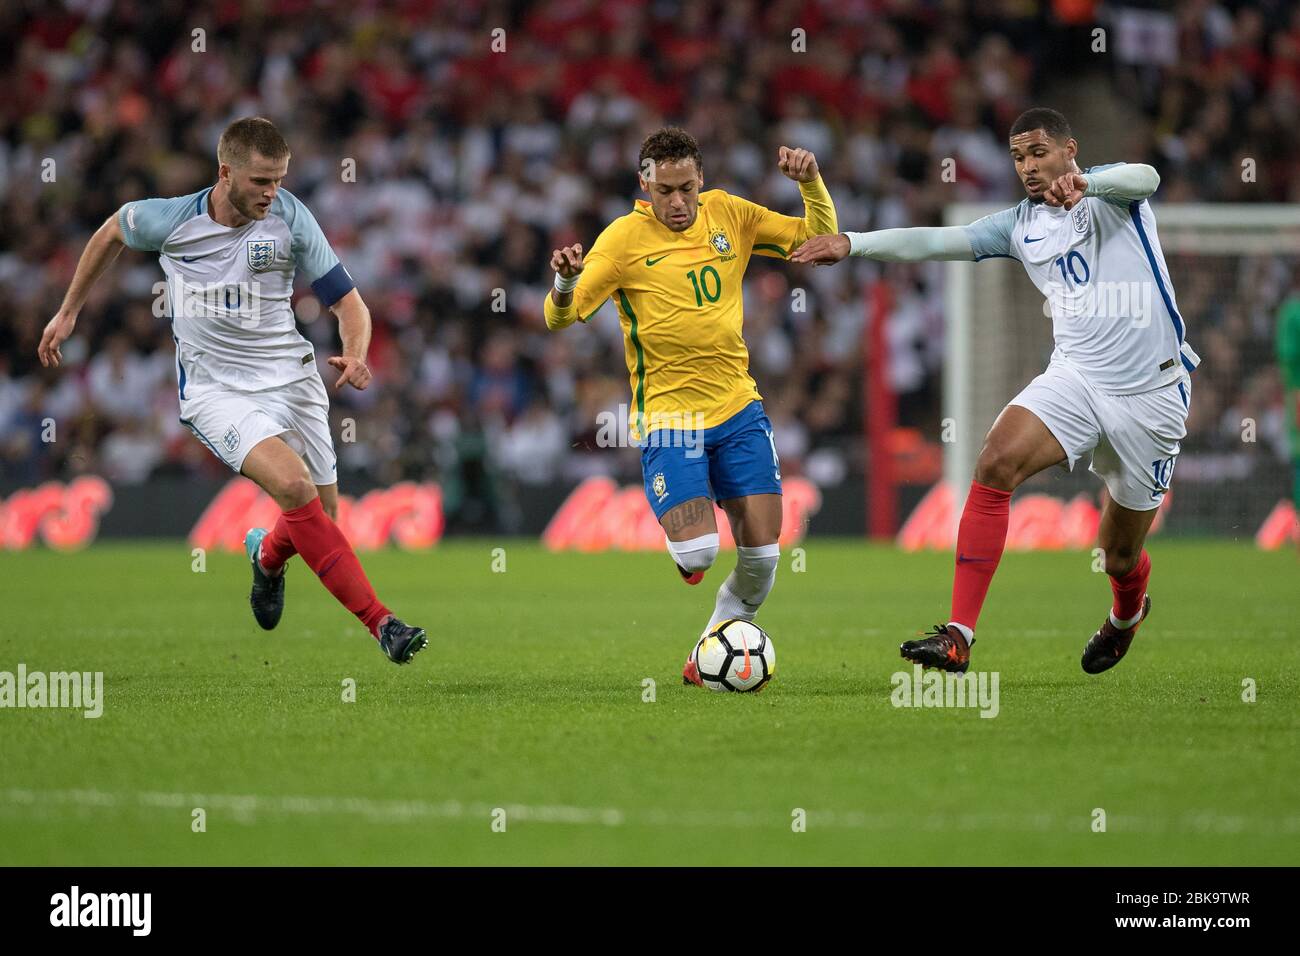 Nazionale del Brasile a Wembley in partita contro l'Inghilterra Foto Stock